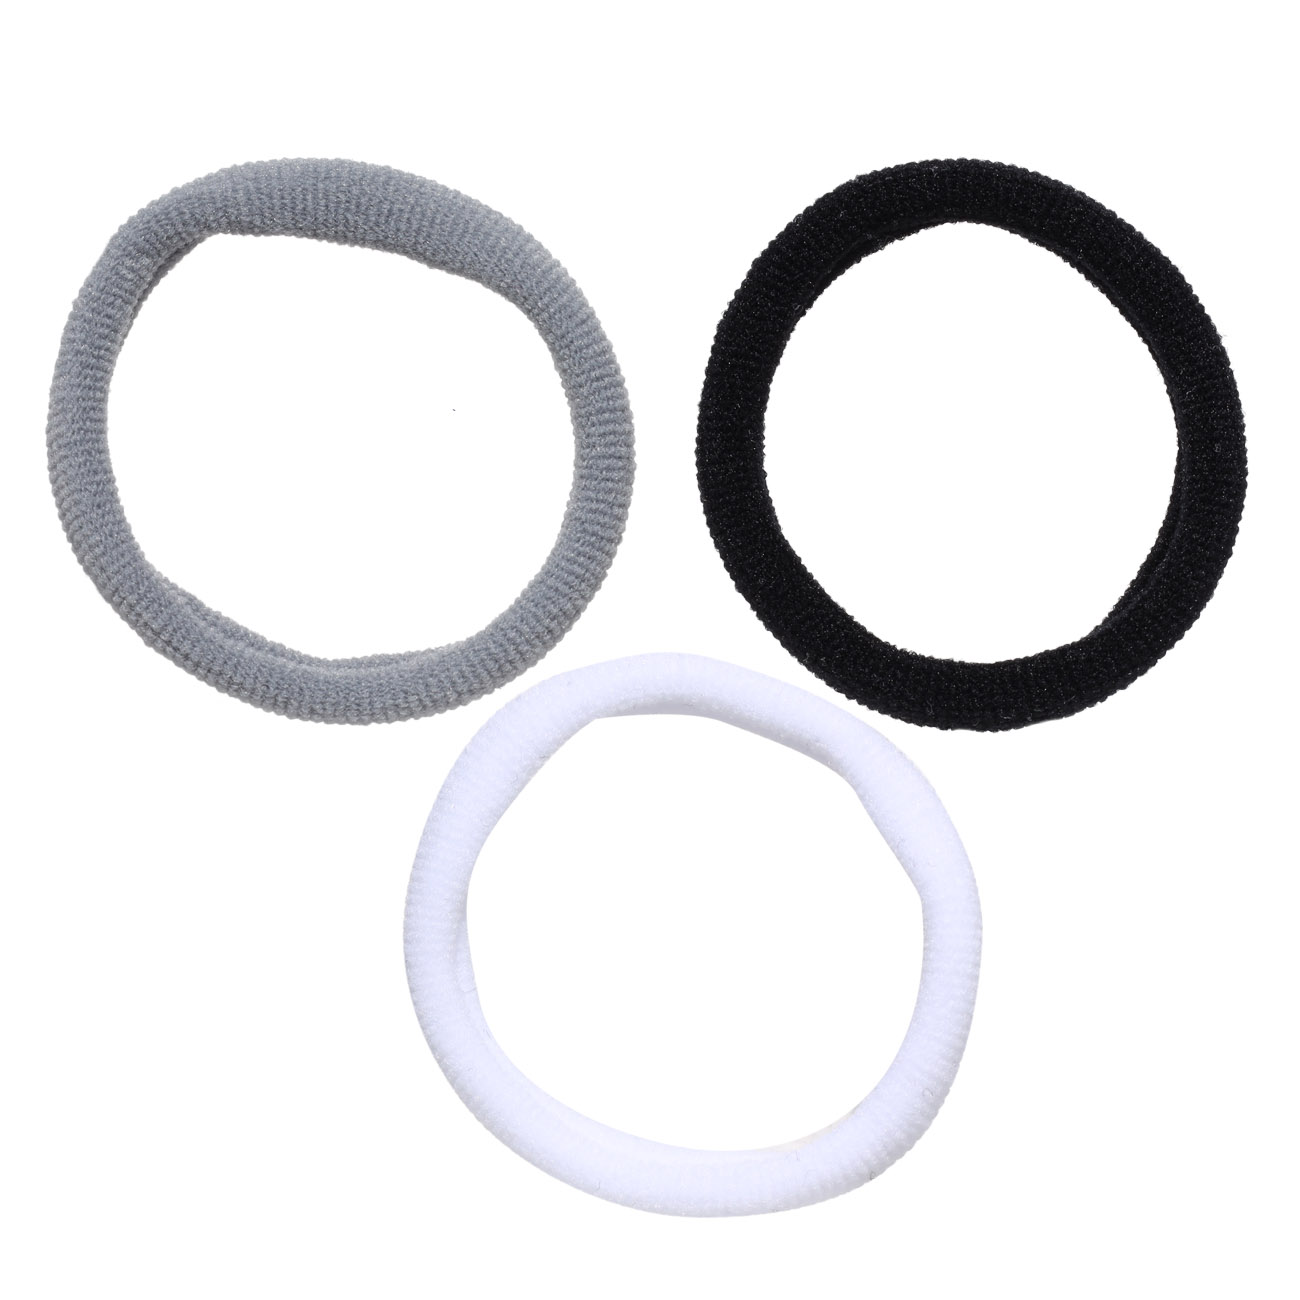 Elastic band for hair, 5 cm, 12 pcs, polyester, gray / white / black, Basic изображение № 2